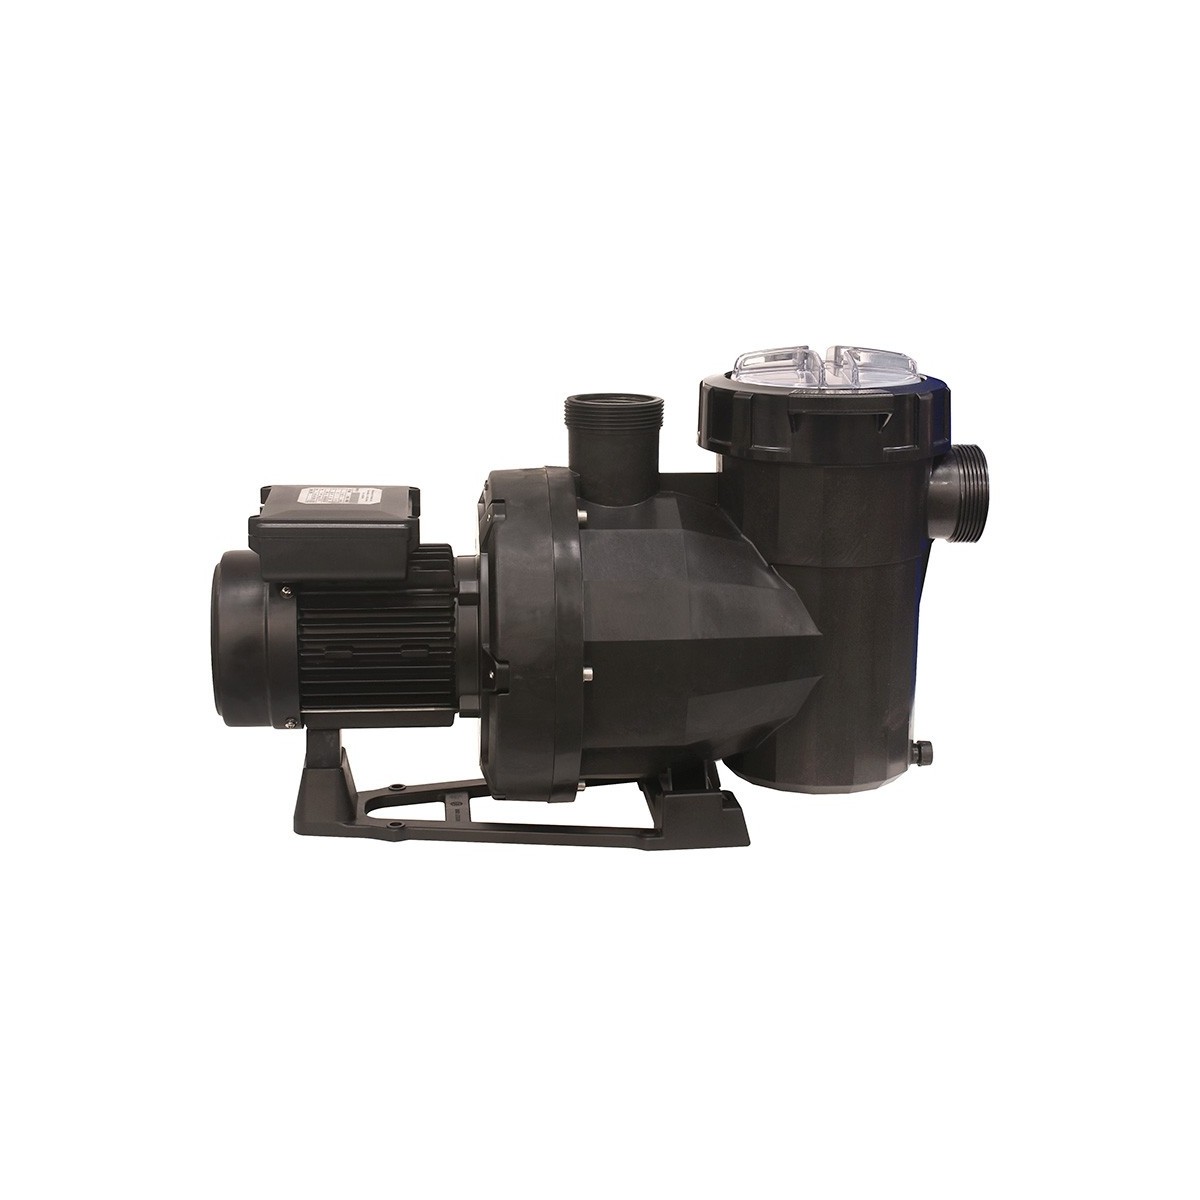 Astral Victoria Plus Silent pump - Kw 1.46 - Load 26 m3/h three